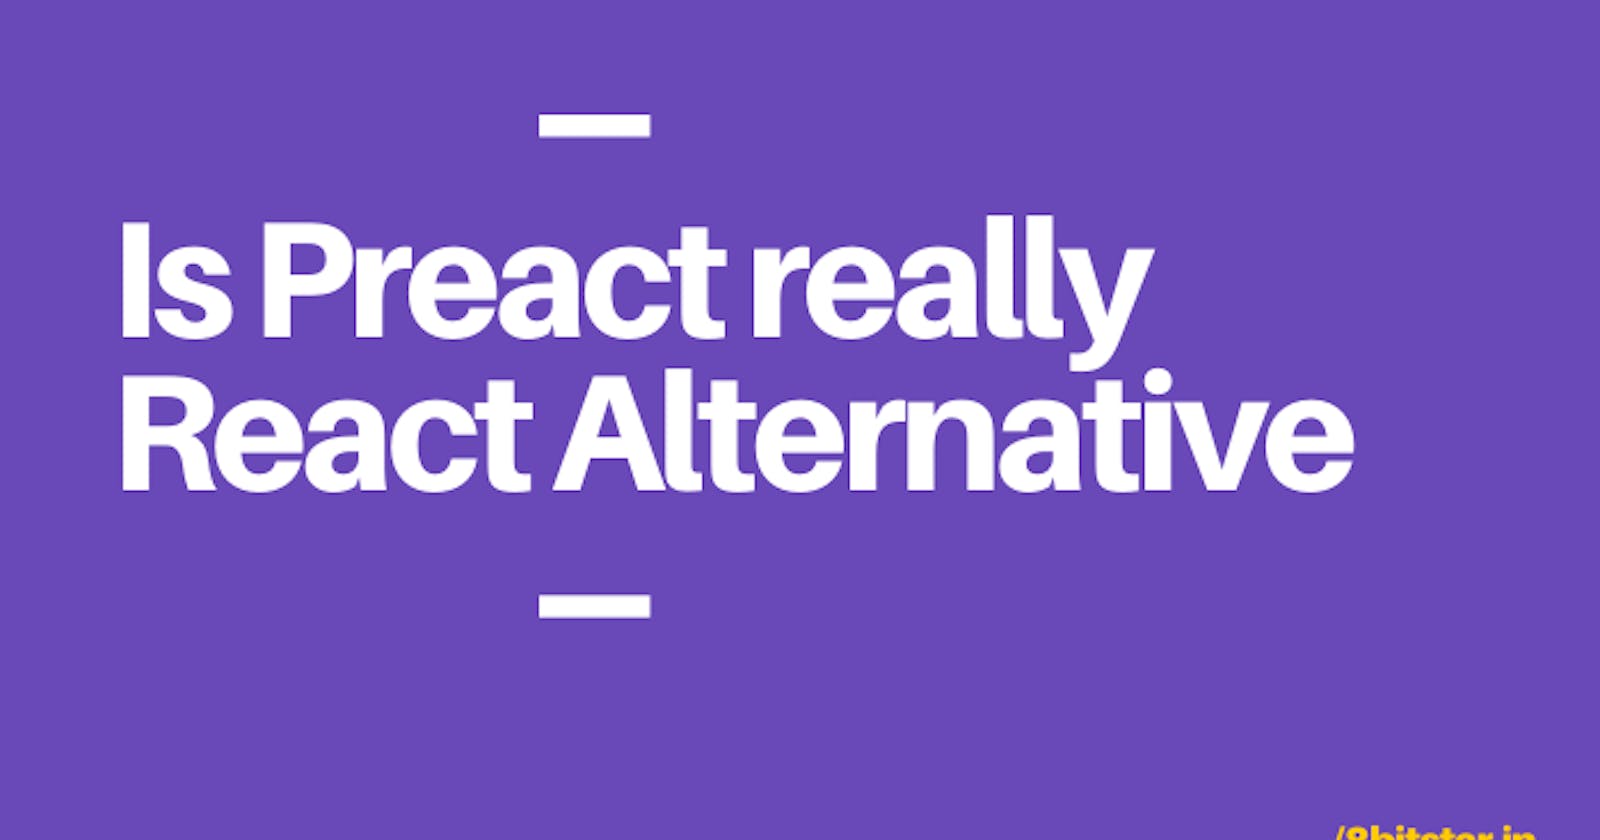 Is Preact really React Alternative